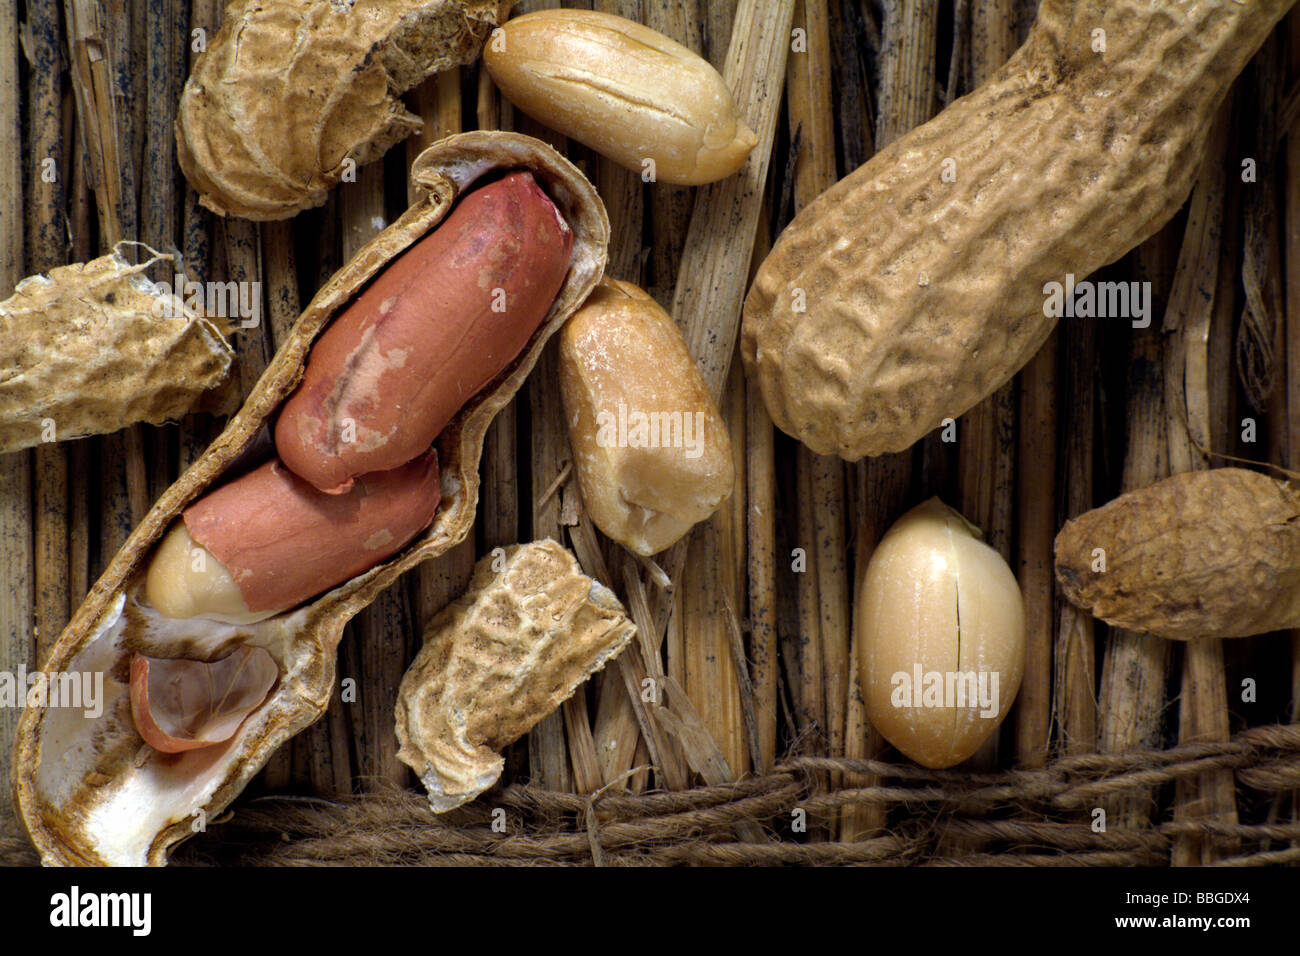 Peanuts (Arachis hypogaea) on straw Stock Photo